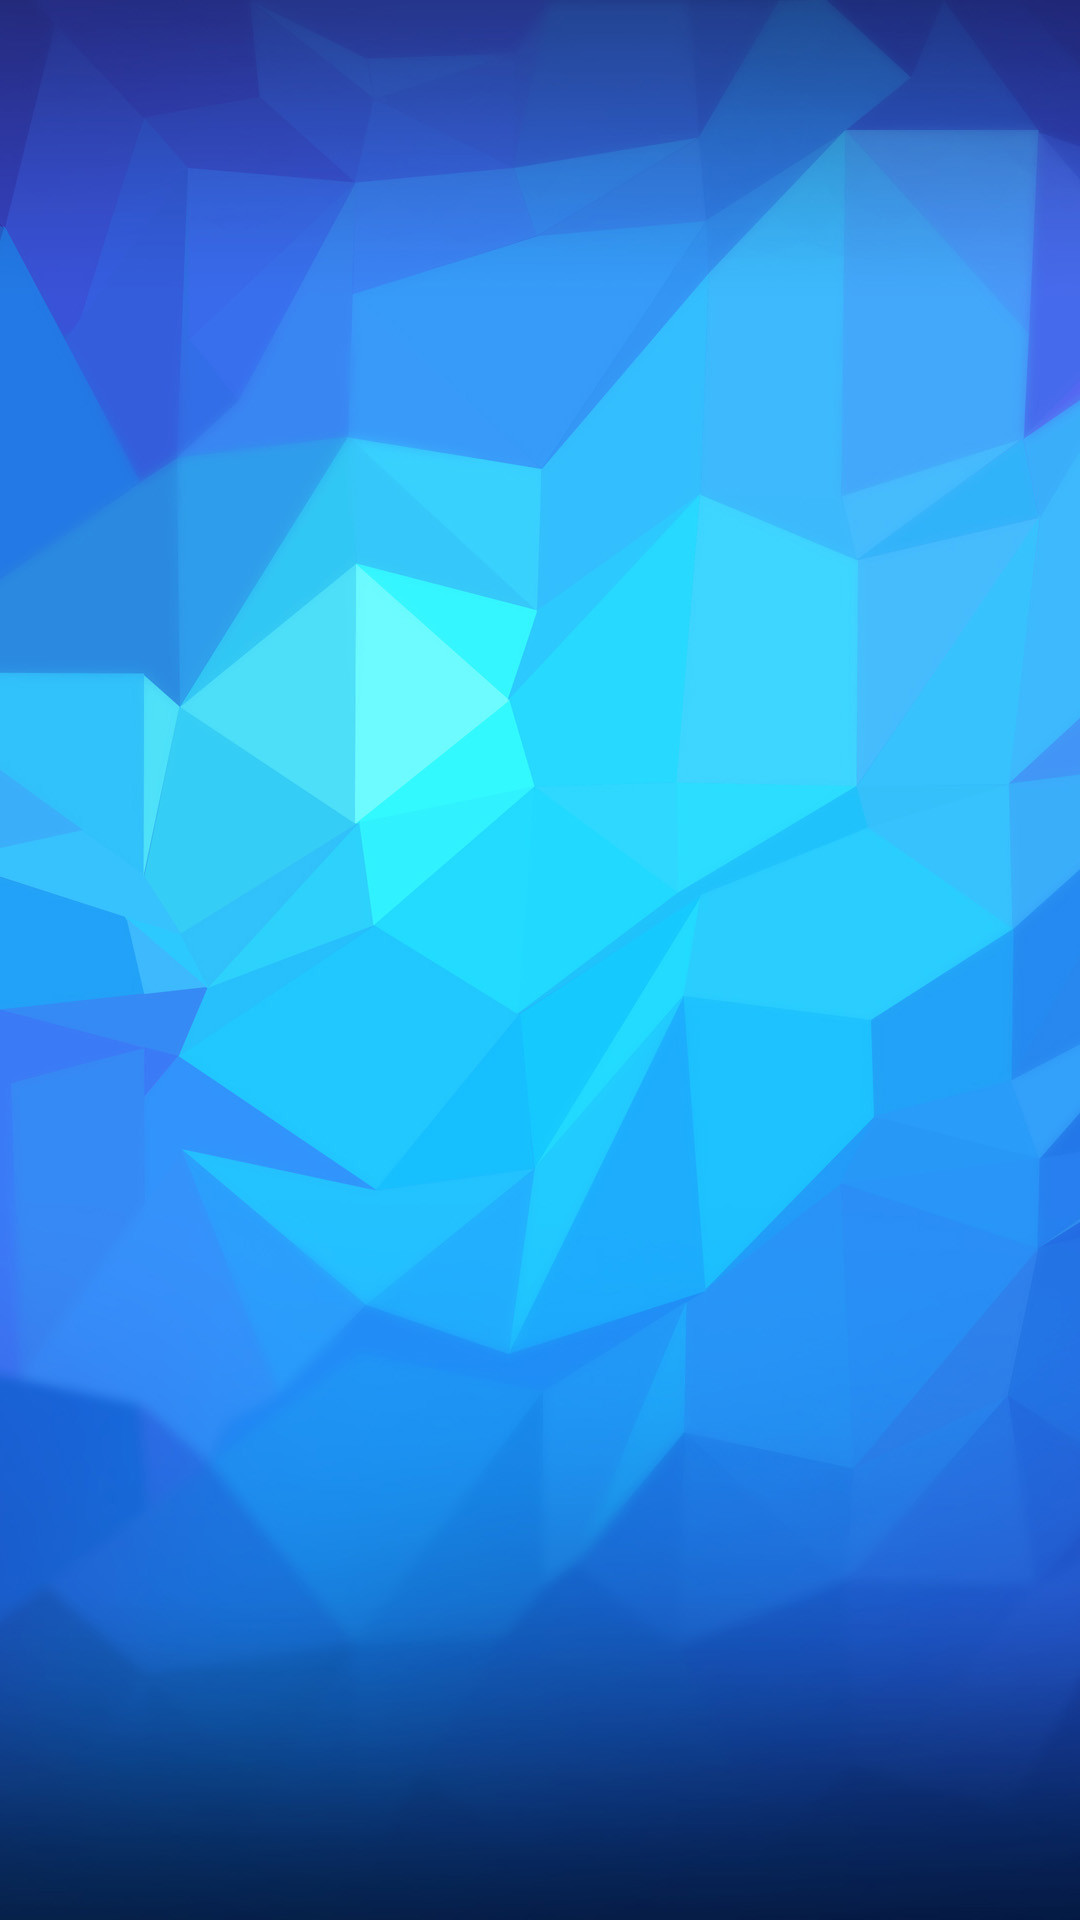 1080x1920 Blue Android Wallpaper - WallpaperSafari ...